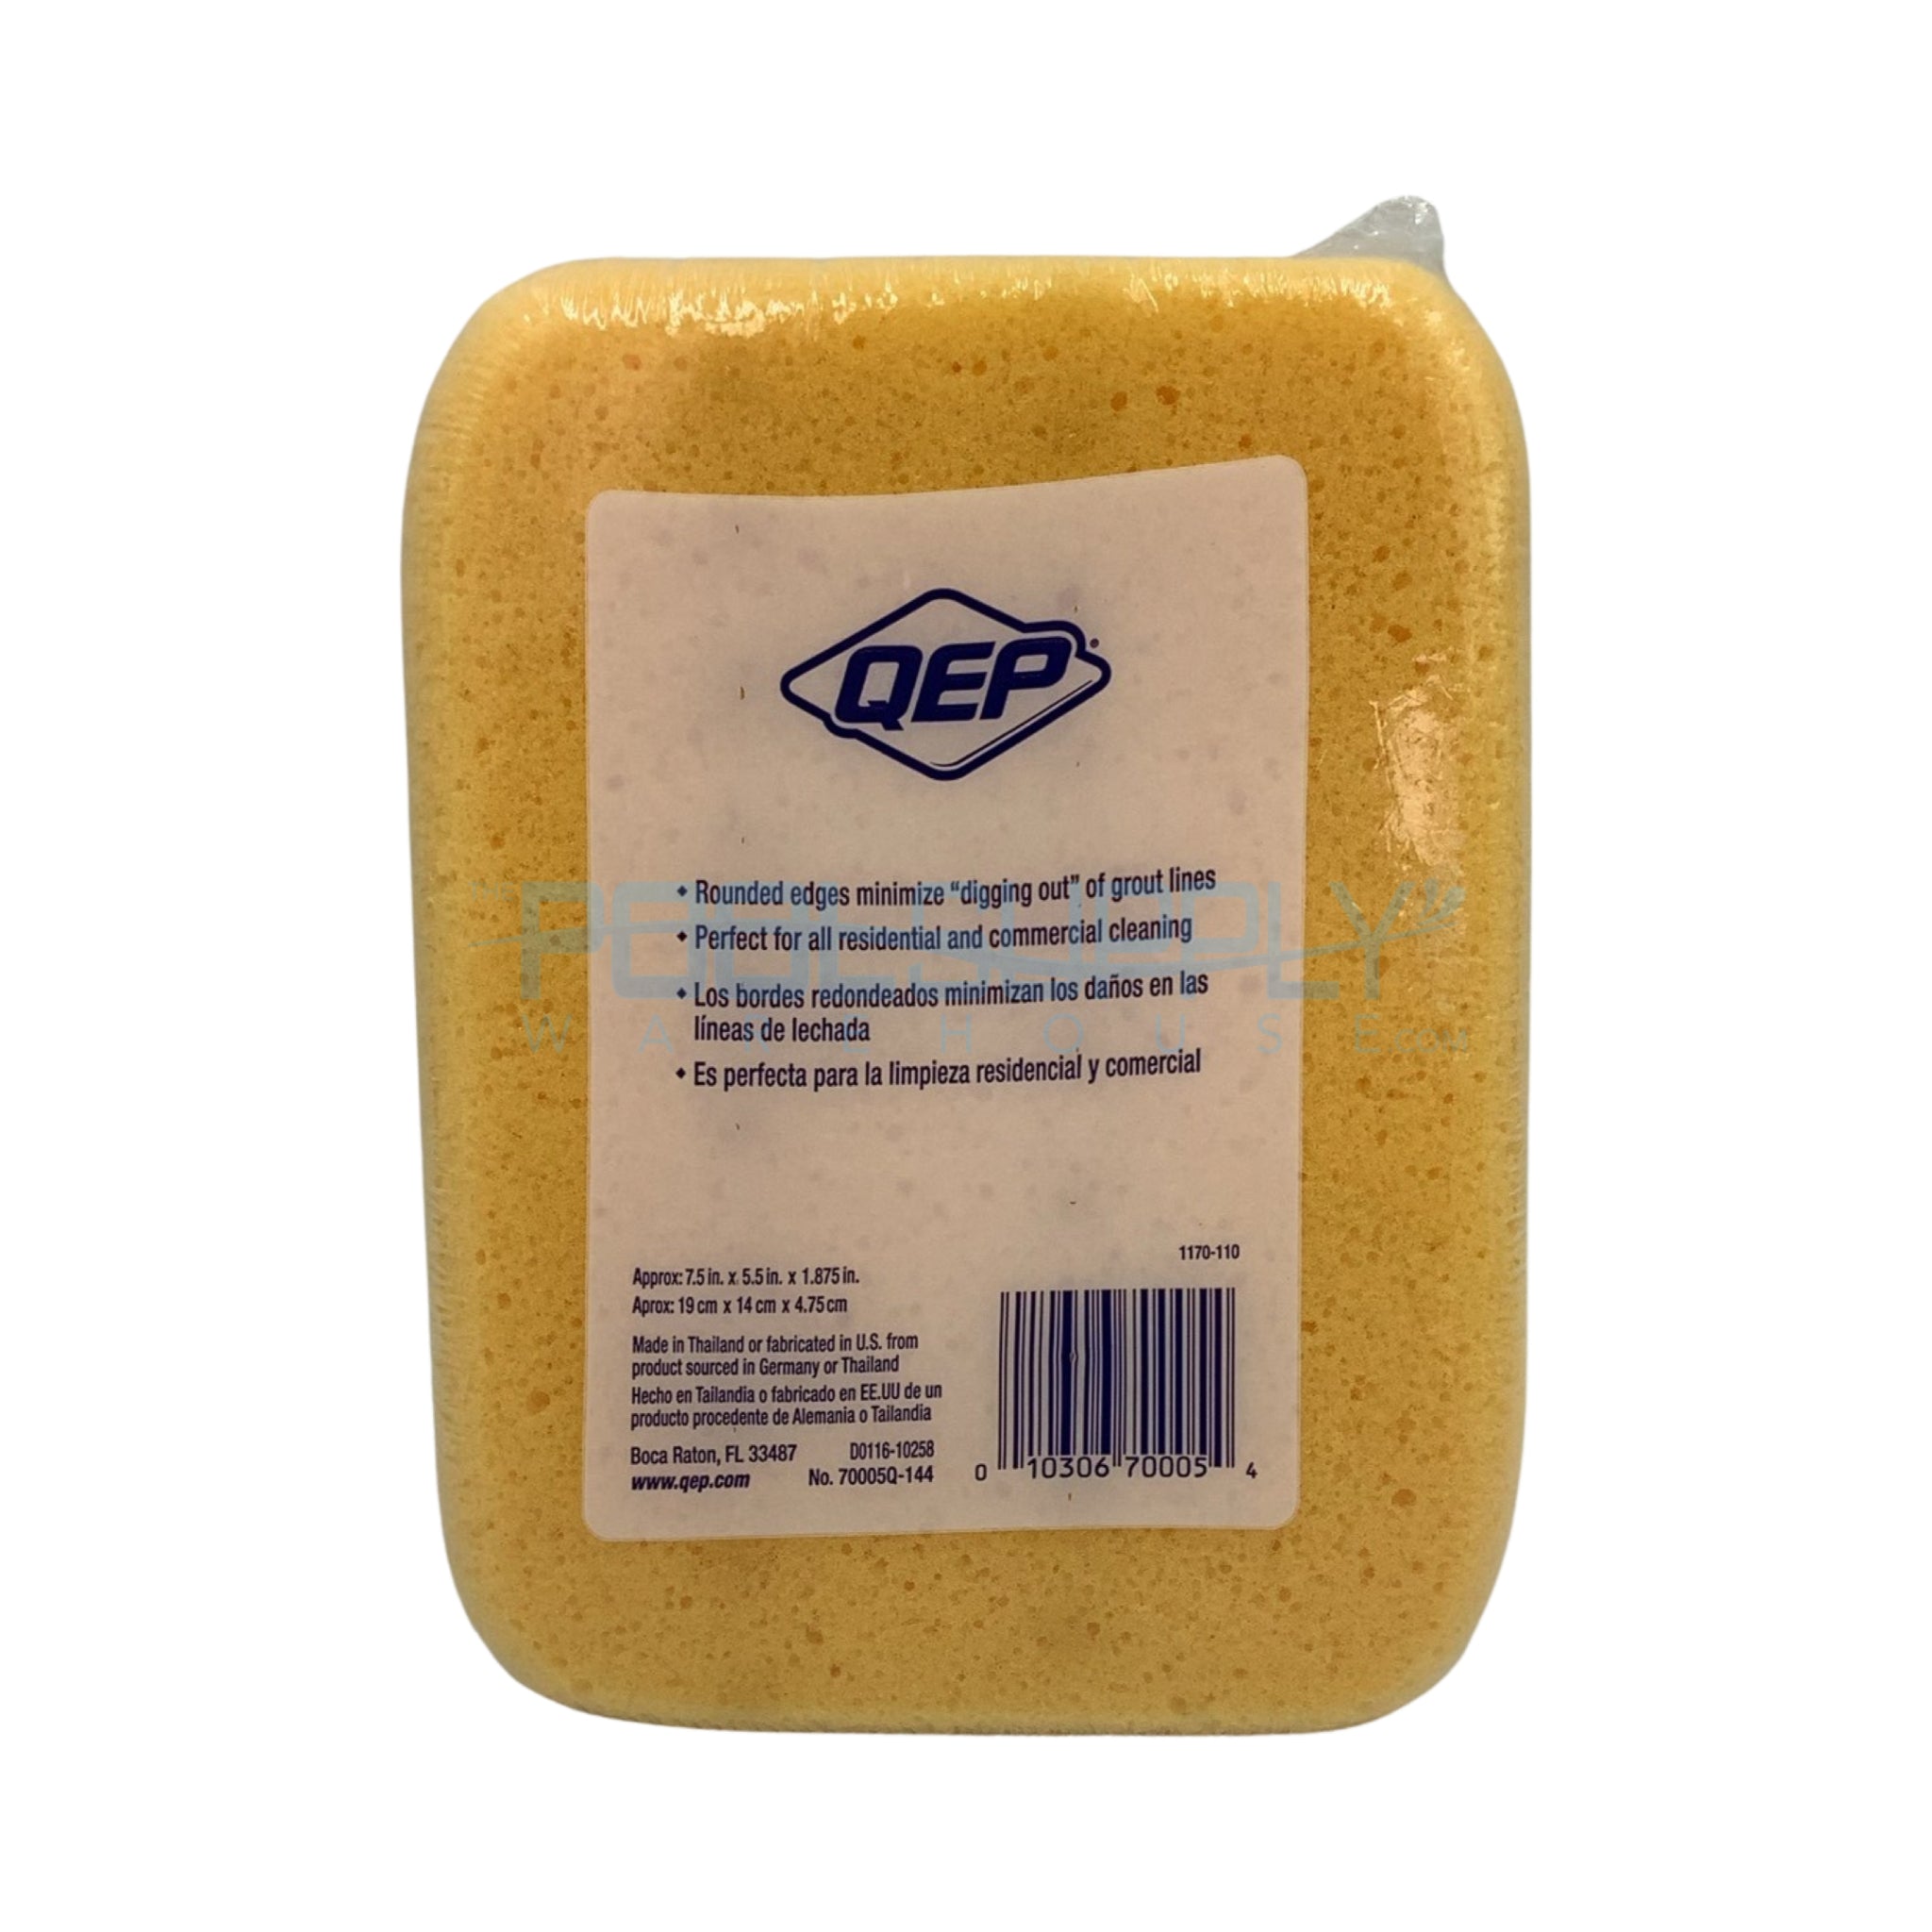 QEP XL All Purpose Sponge - 70005Q-144 - The Pool Supply Warehouse